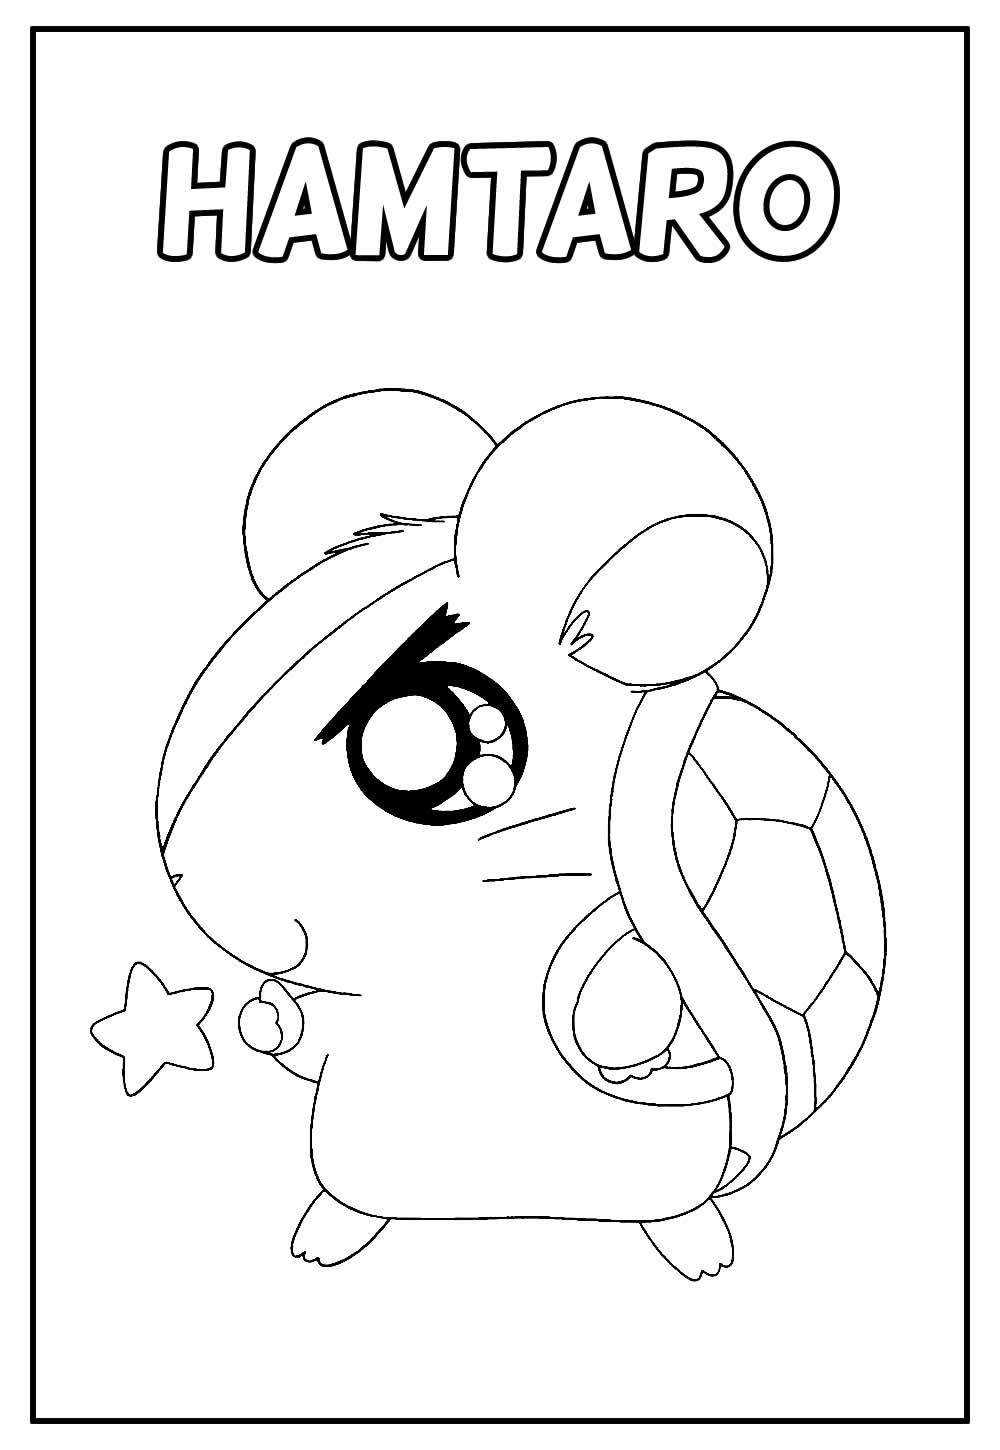 Desenho Educativo de Hamtaro para colorir